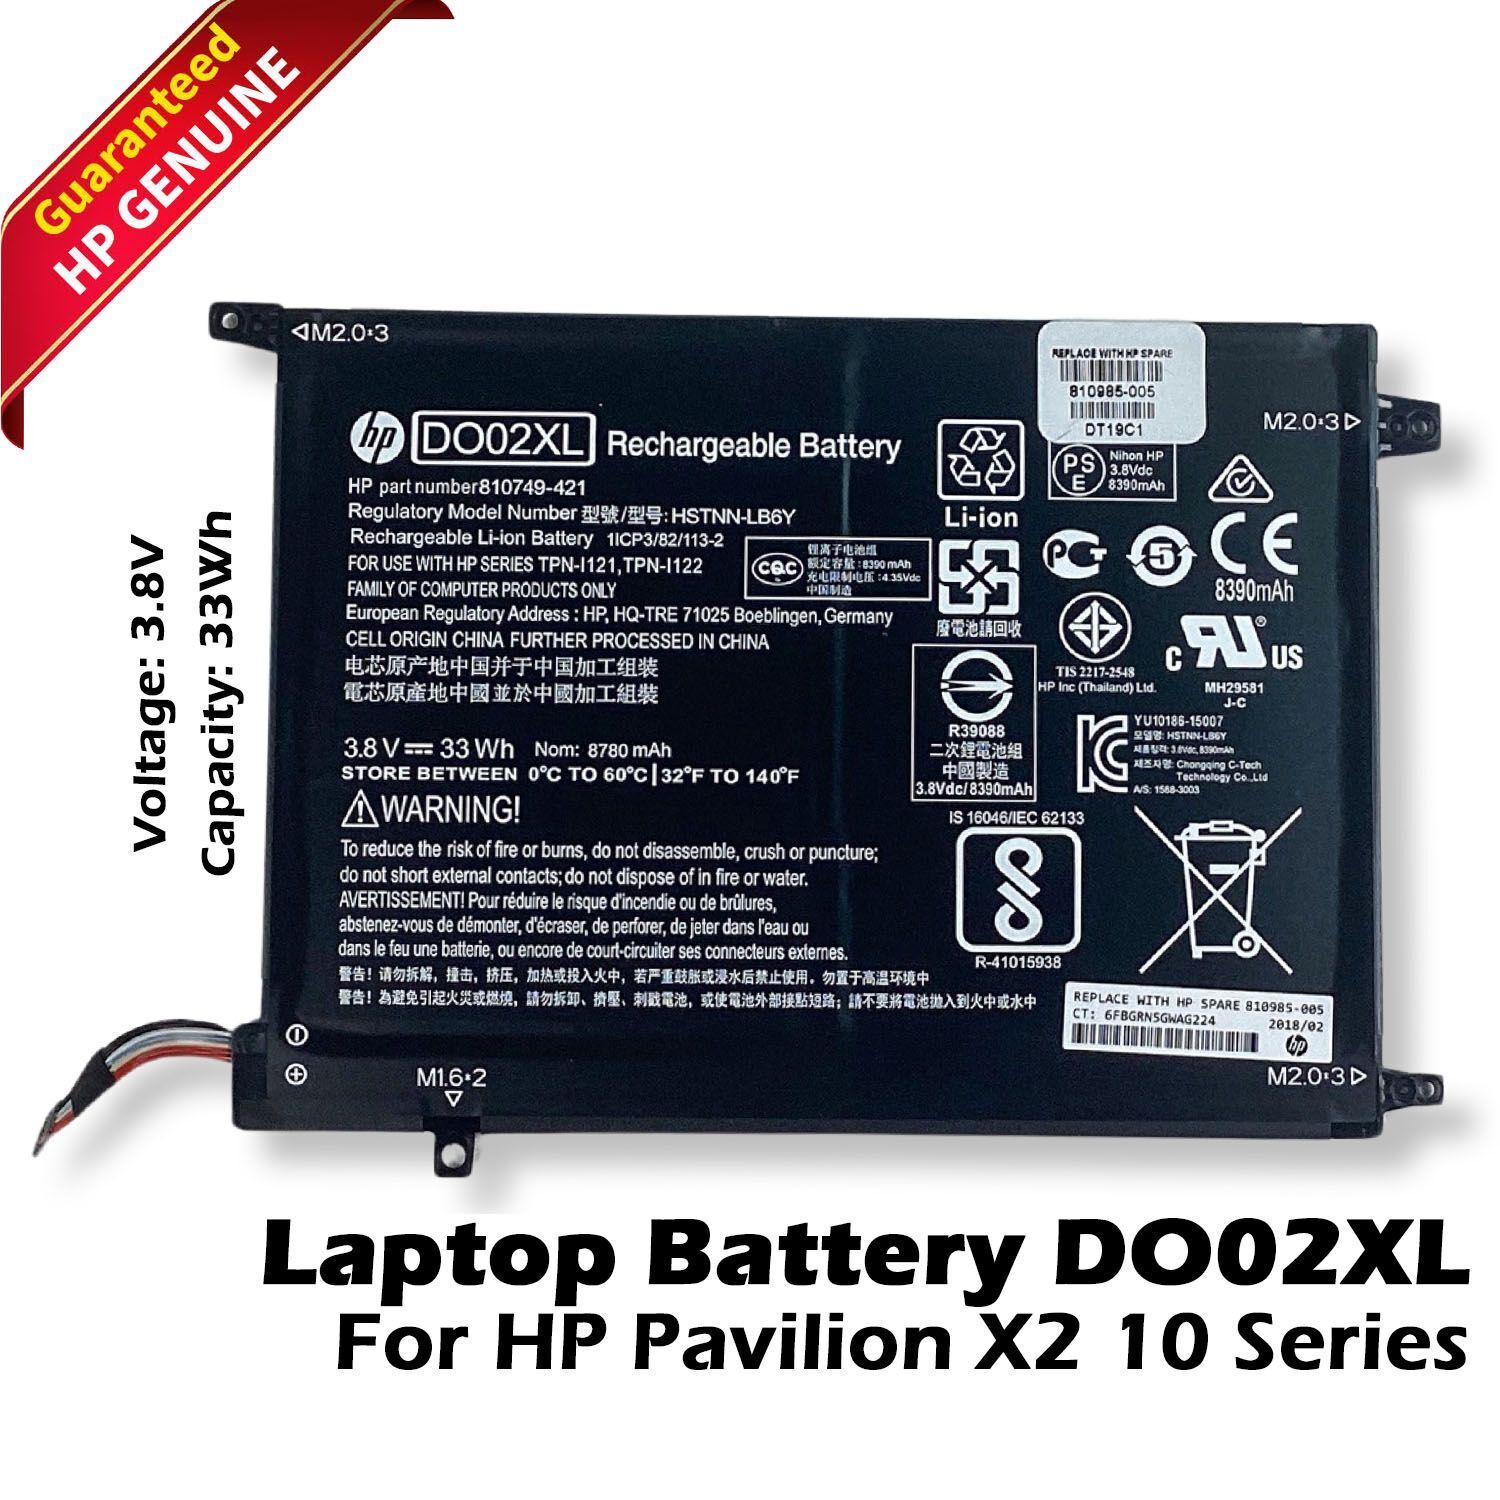 DO02XL Battery for HP Pavilion X2 210 G1 10-N HSTNN-LB6Y 810985-005 810749-2C1